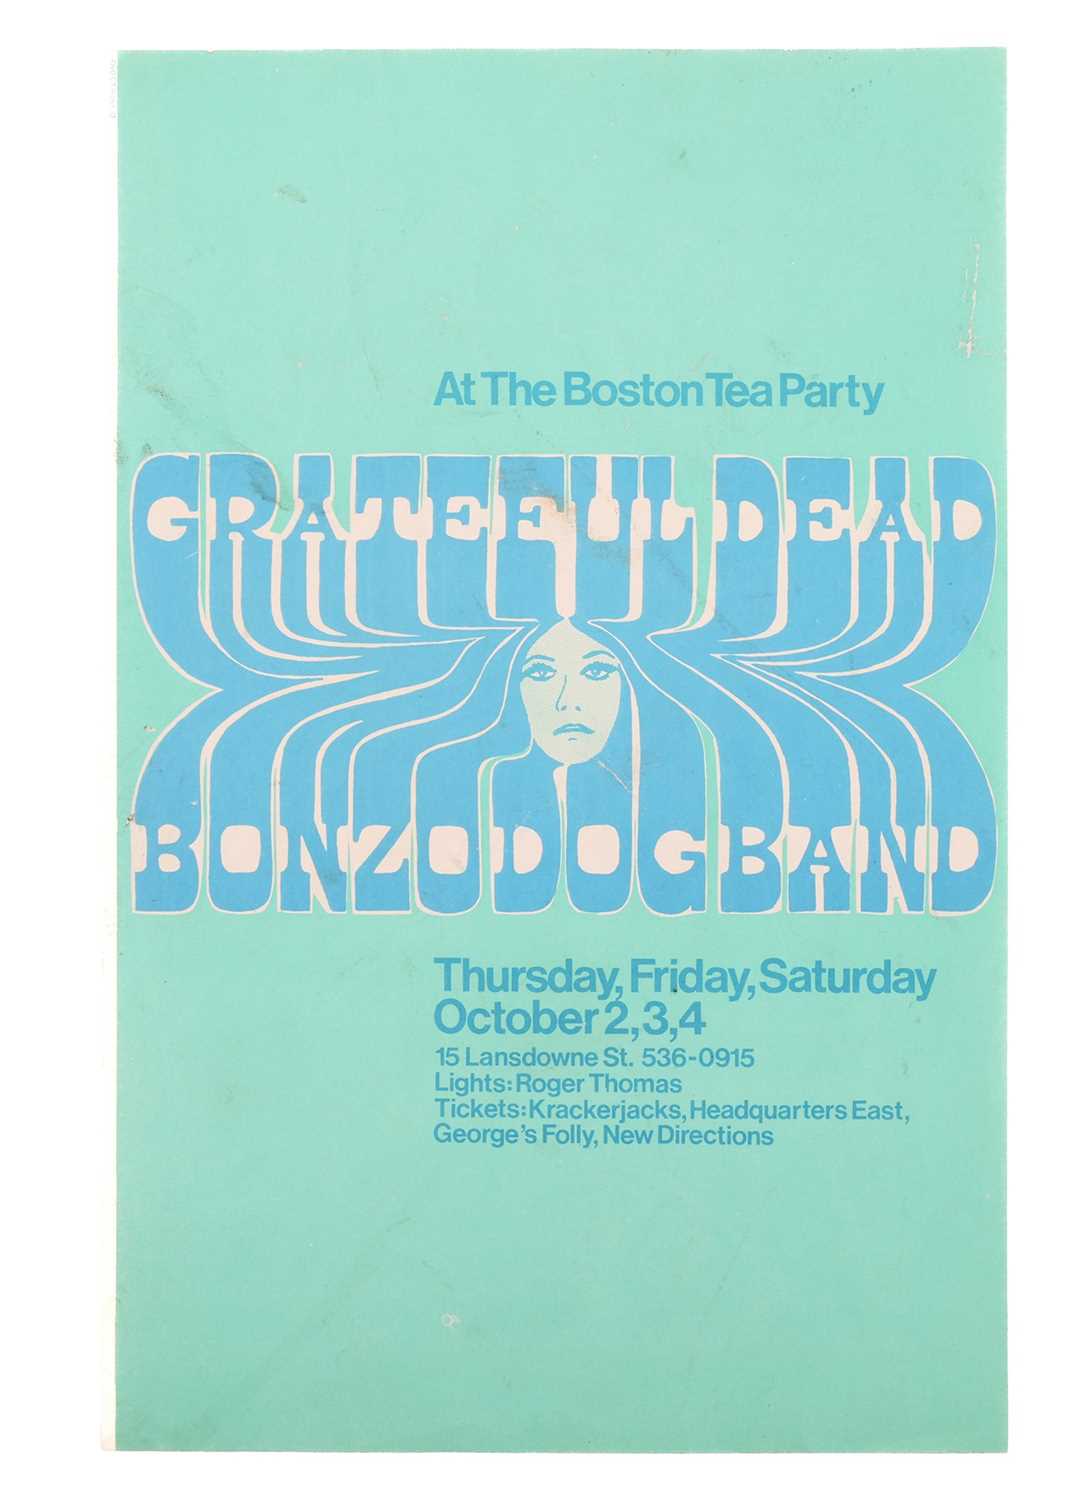 An original first-printing concert handbill for Grateful Dead / Bonzo Dog Band at 'The Boston Tea Pa